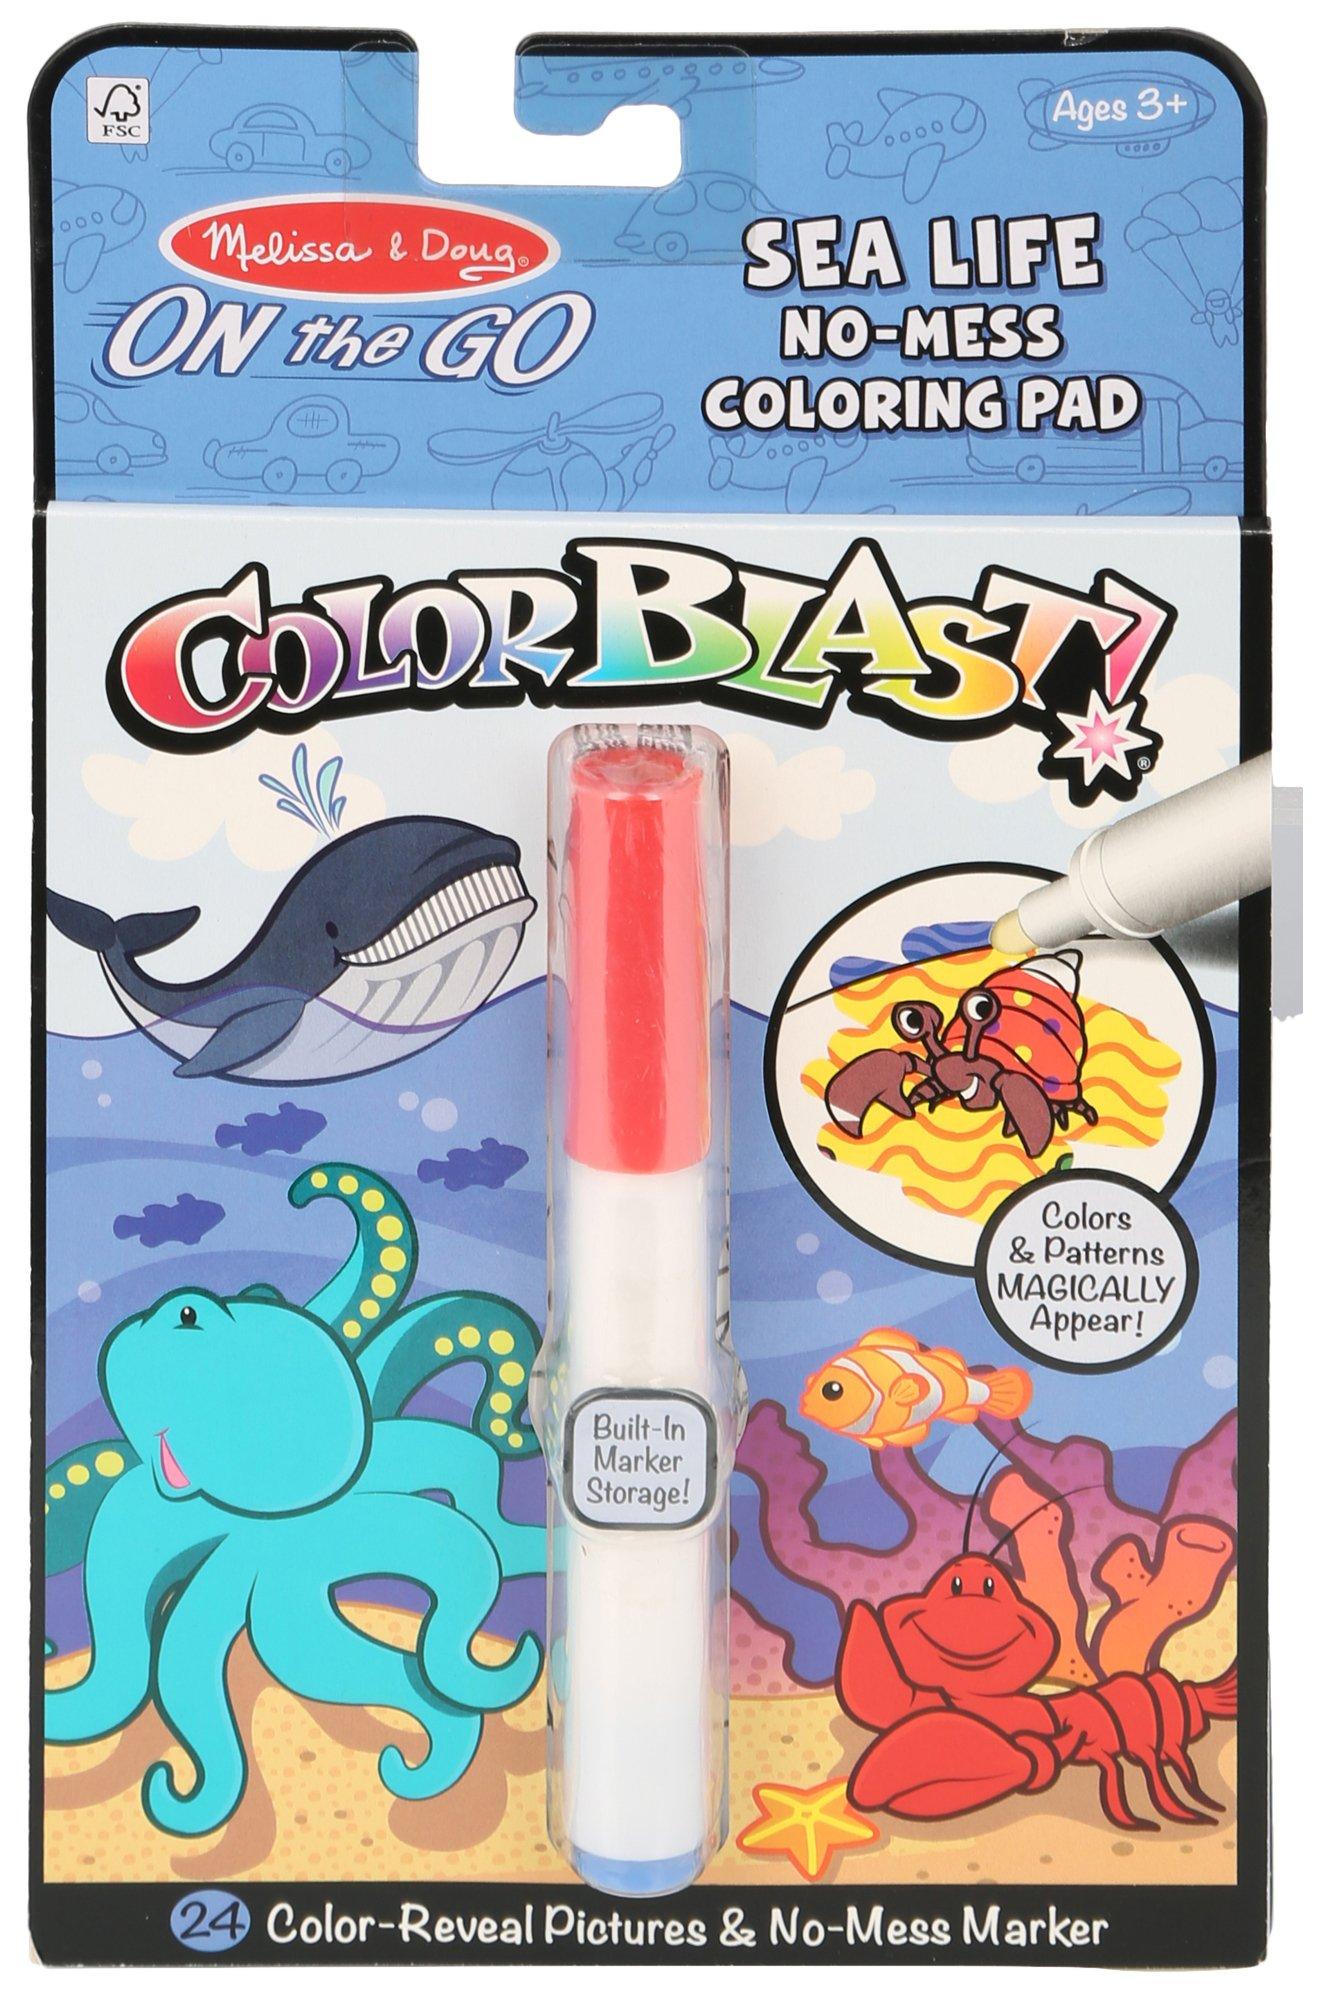 Color Blast Sea Life No-Mess Coloring Pad